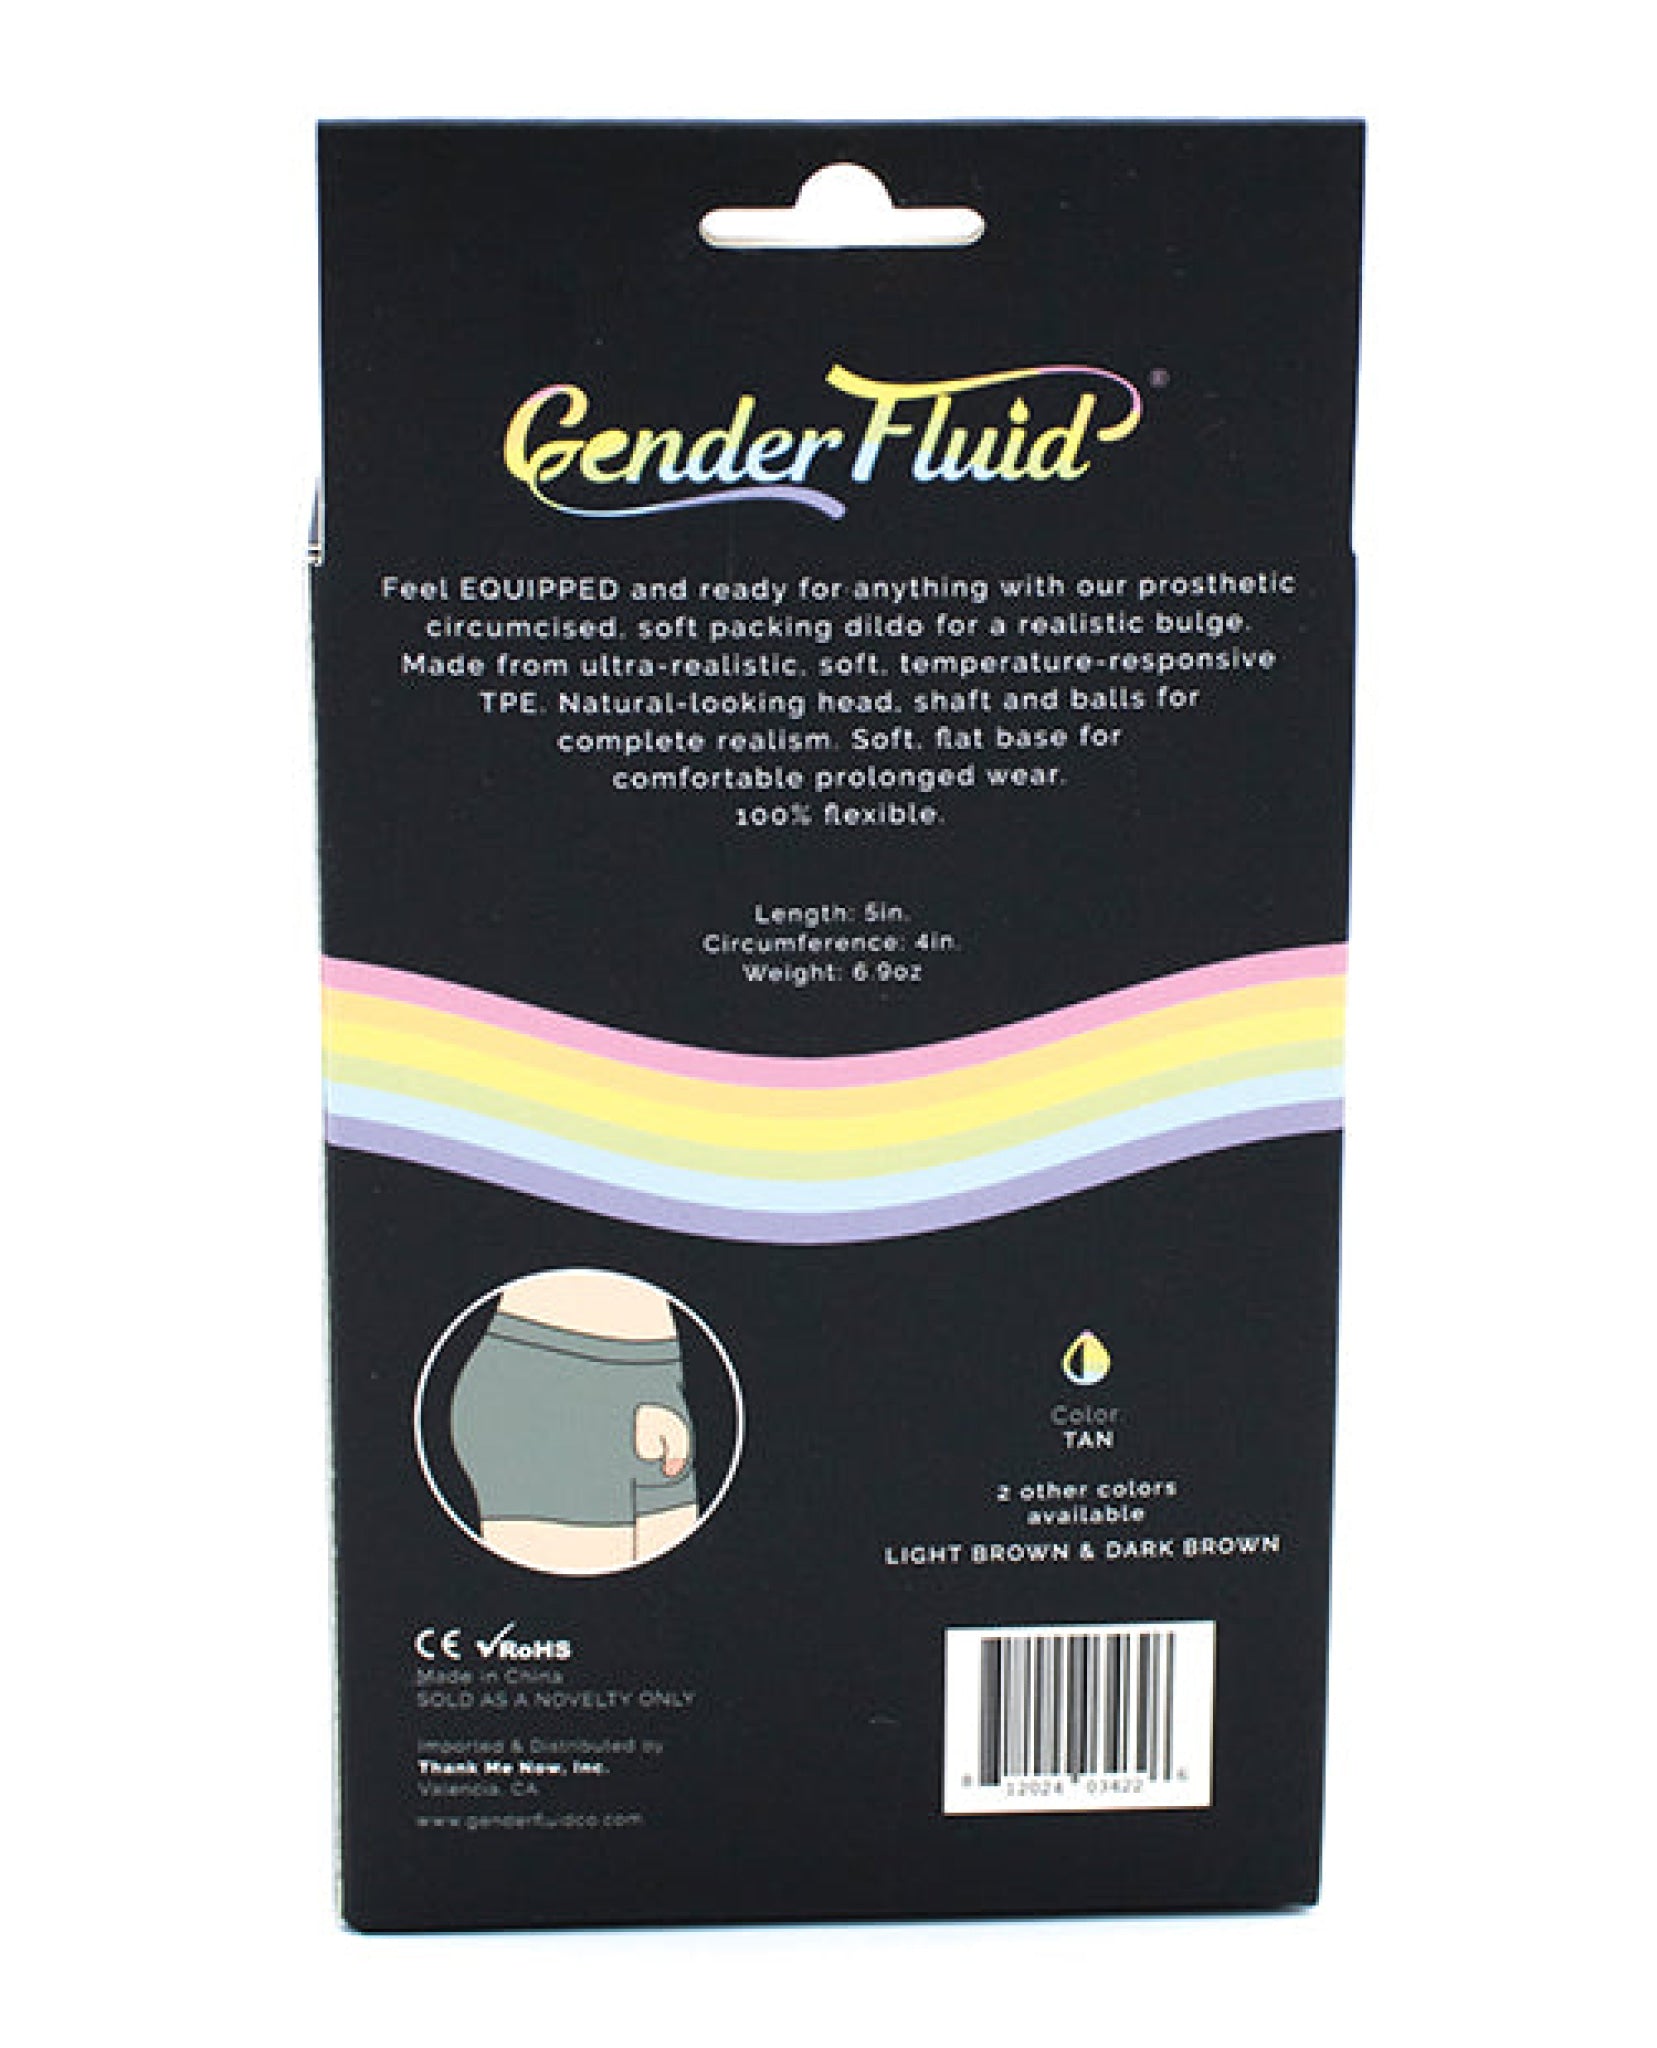 Gender Fluid 5" Equipped Soft Packer Gender Fluid